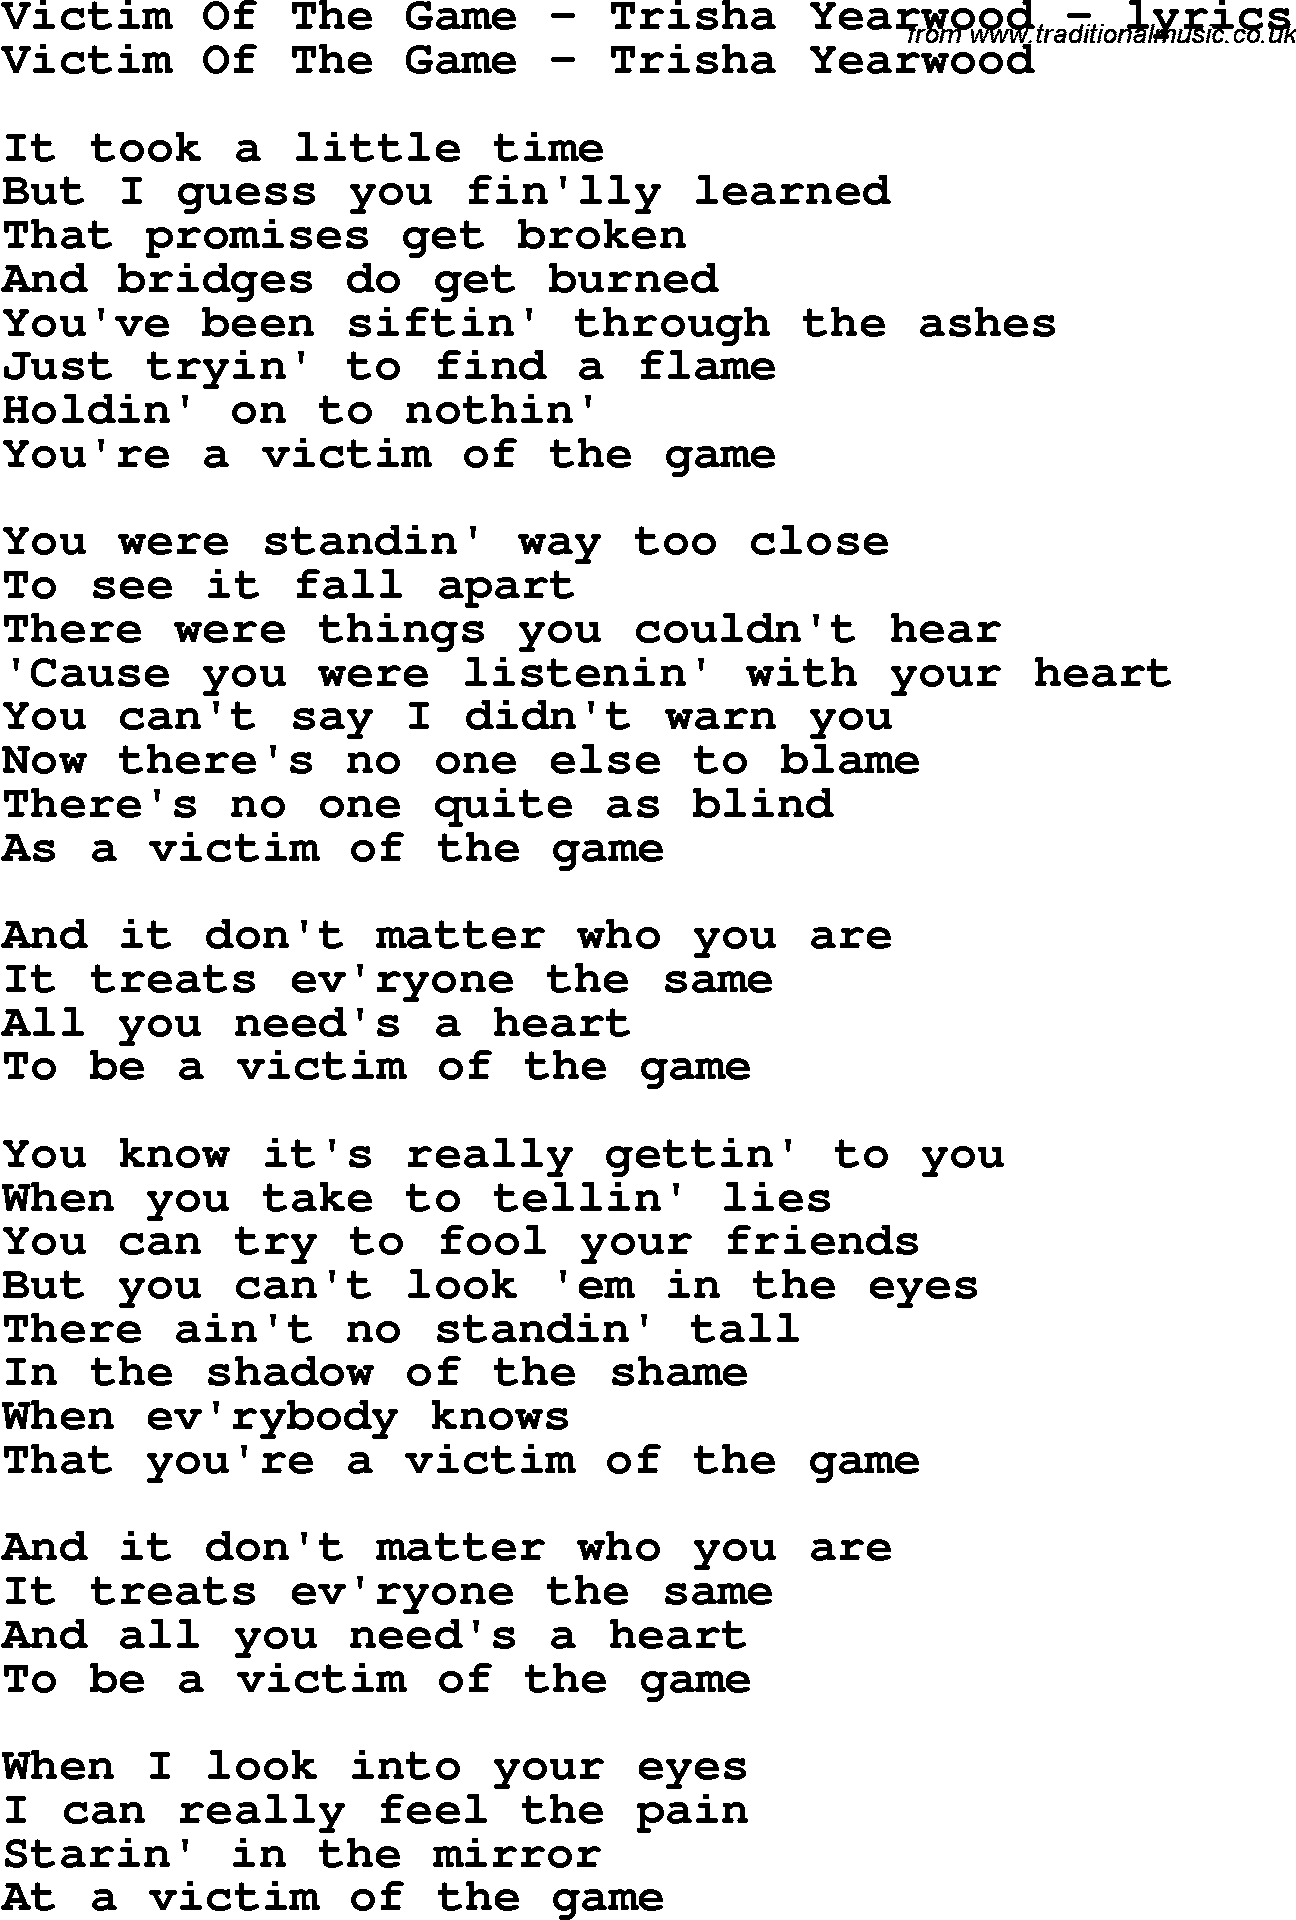 Love Song Lyrics for:Victim Of The Game - Trisha Yearwood